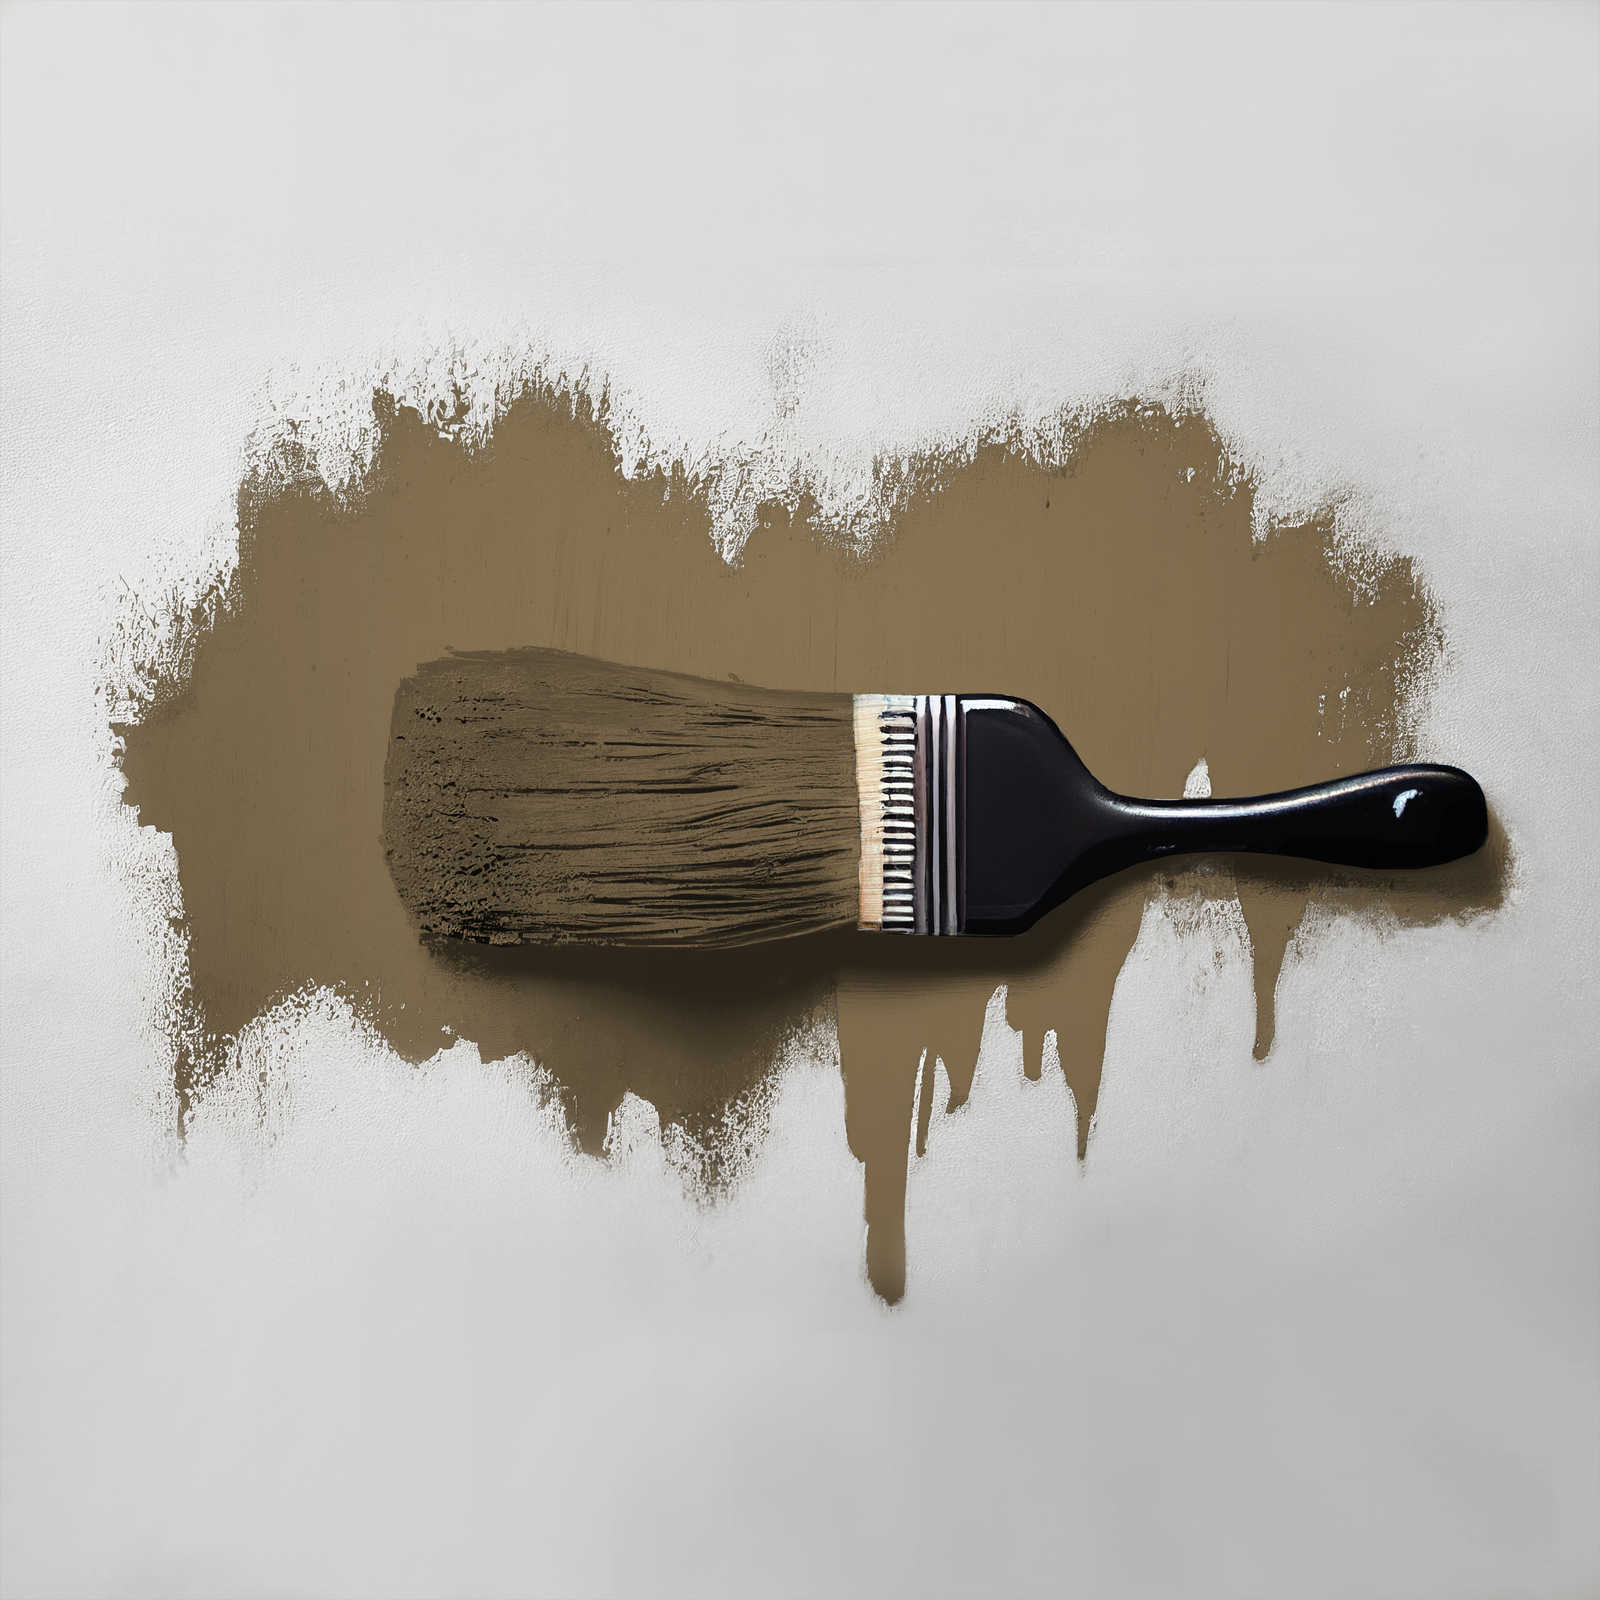             Wandfarbe in tiefem Braun »Tasty Truffle« TCK6014 – 2,5 Liter
        